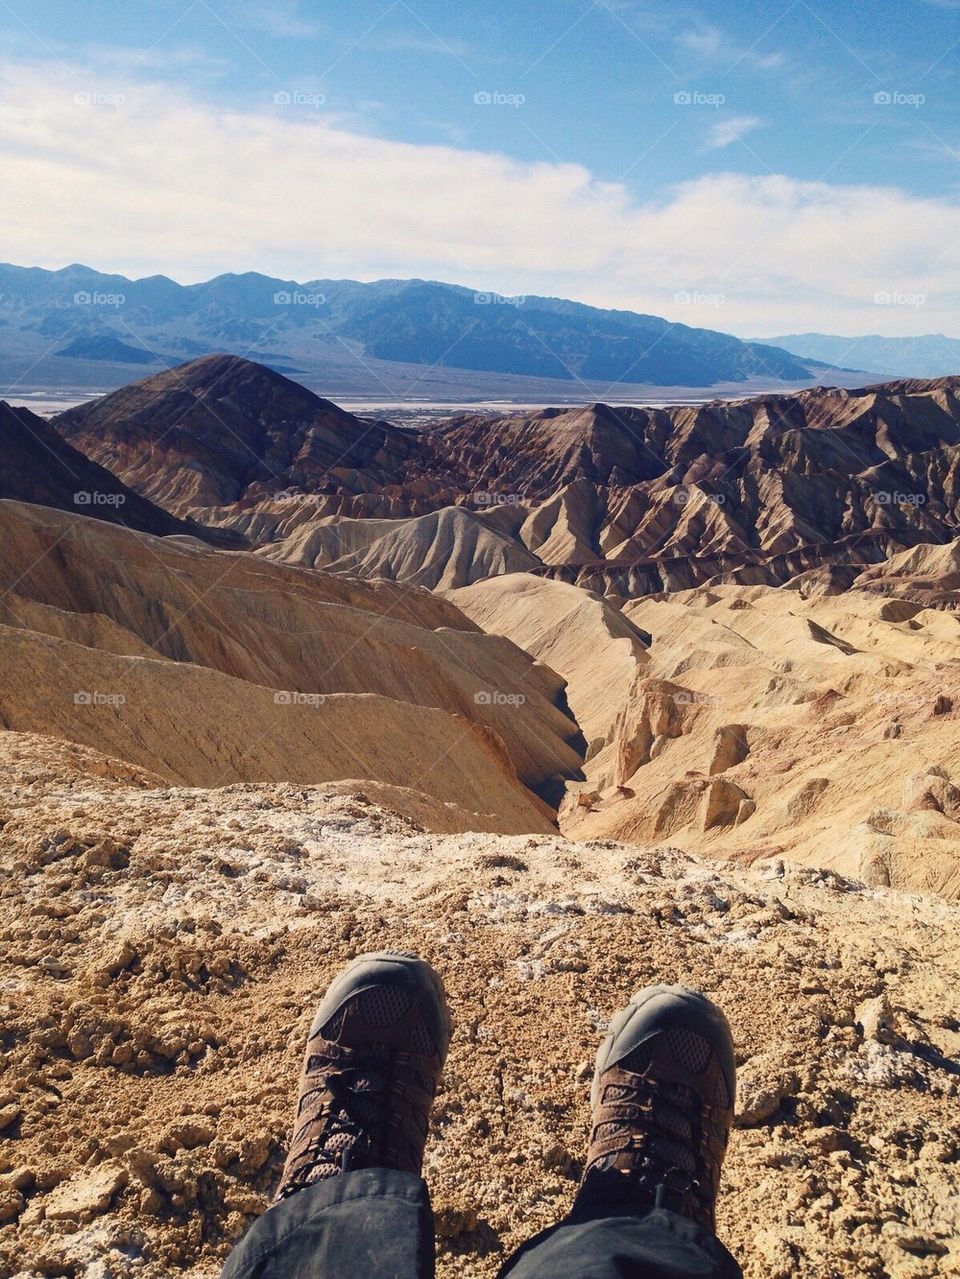 Feet selfie at Death Valley 